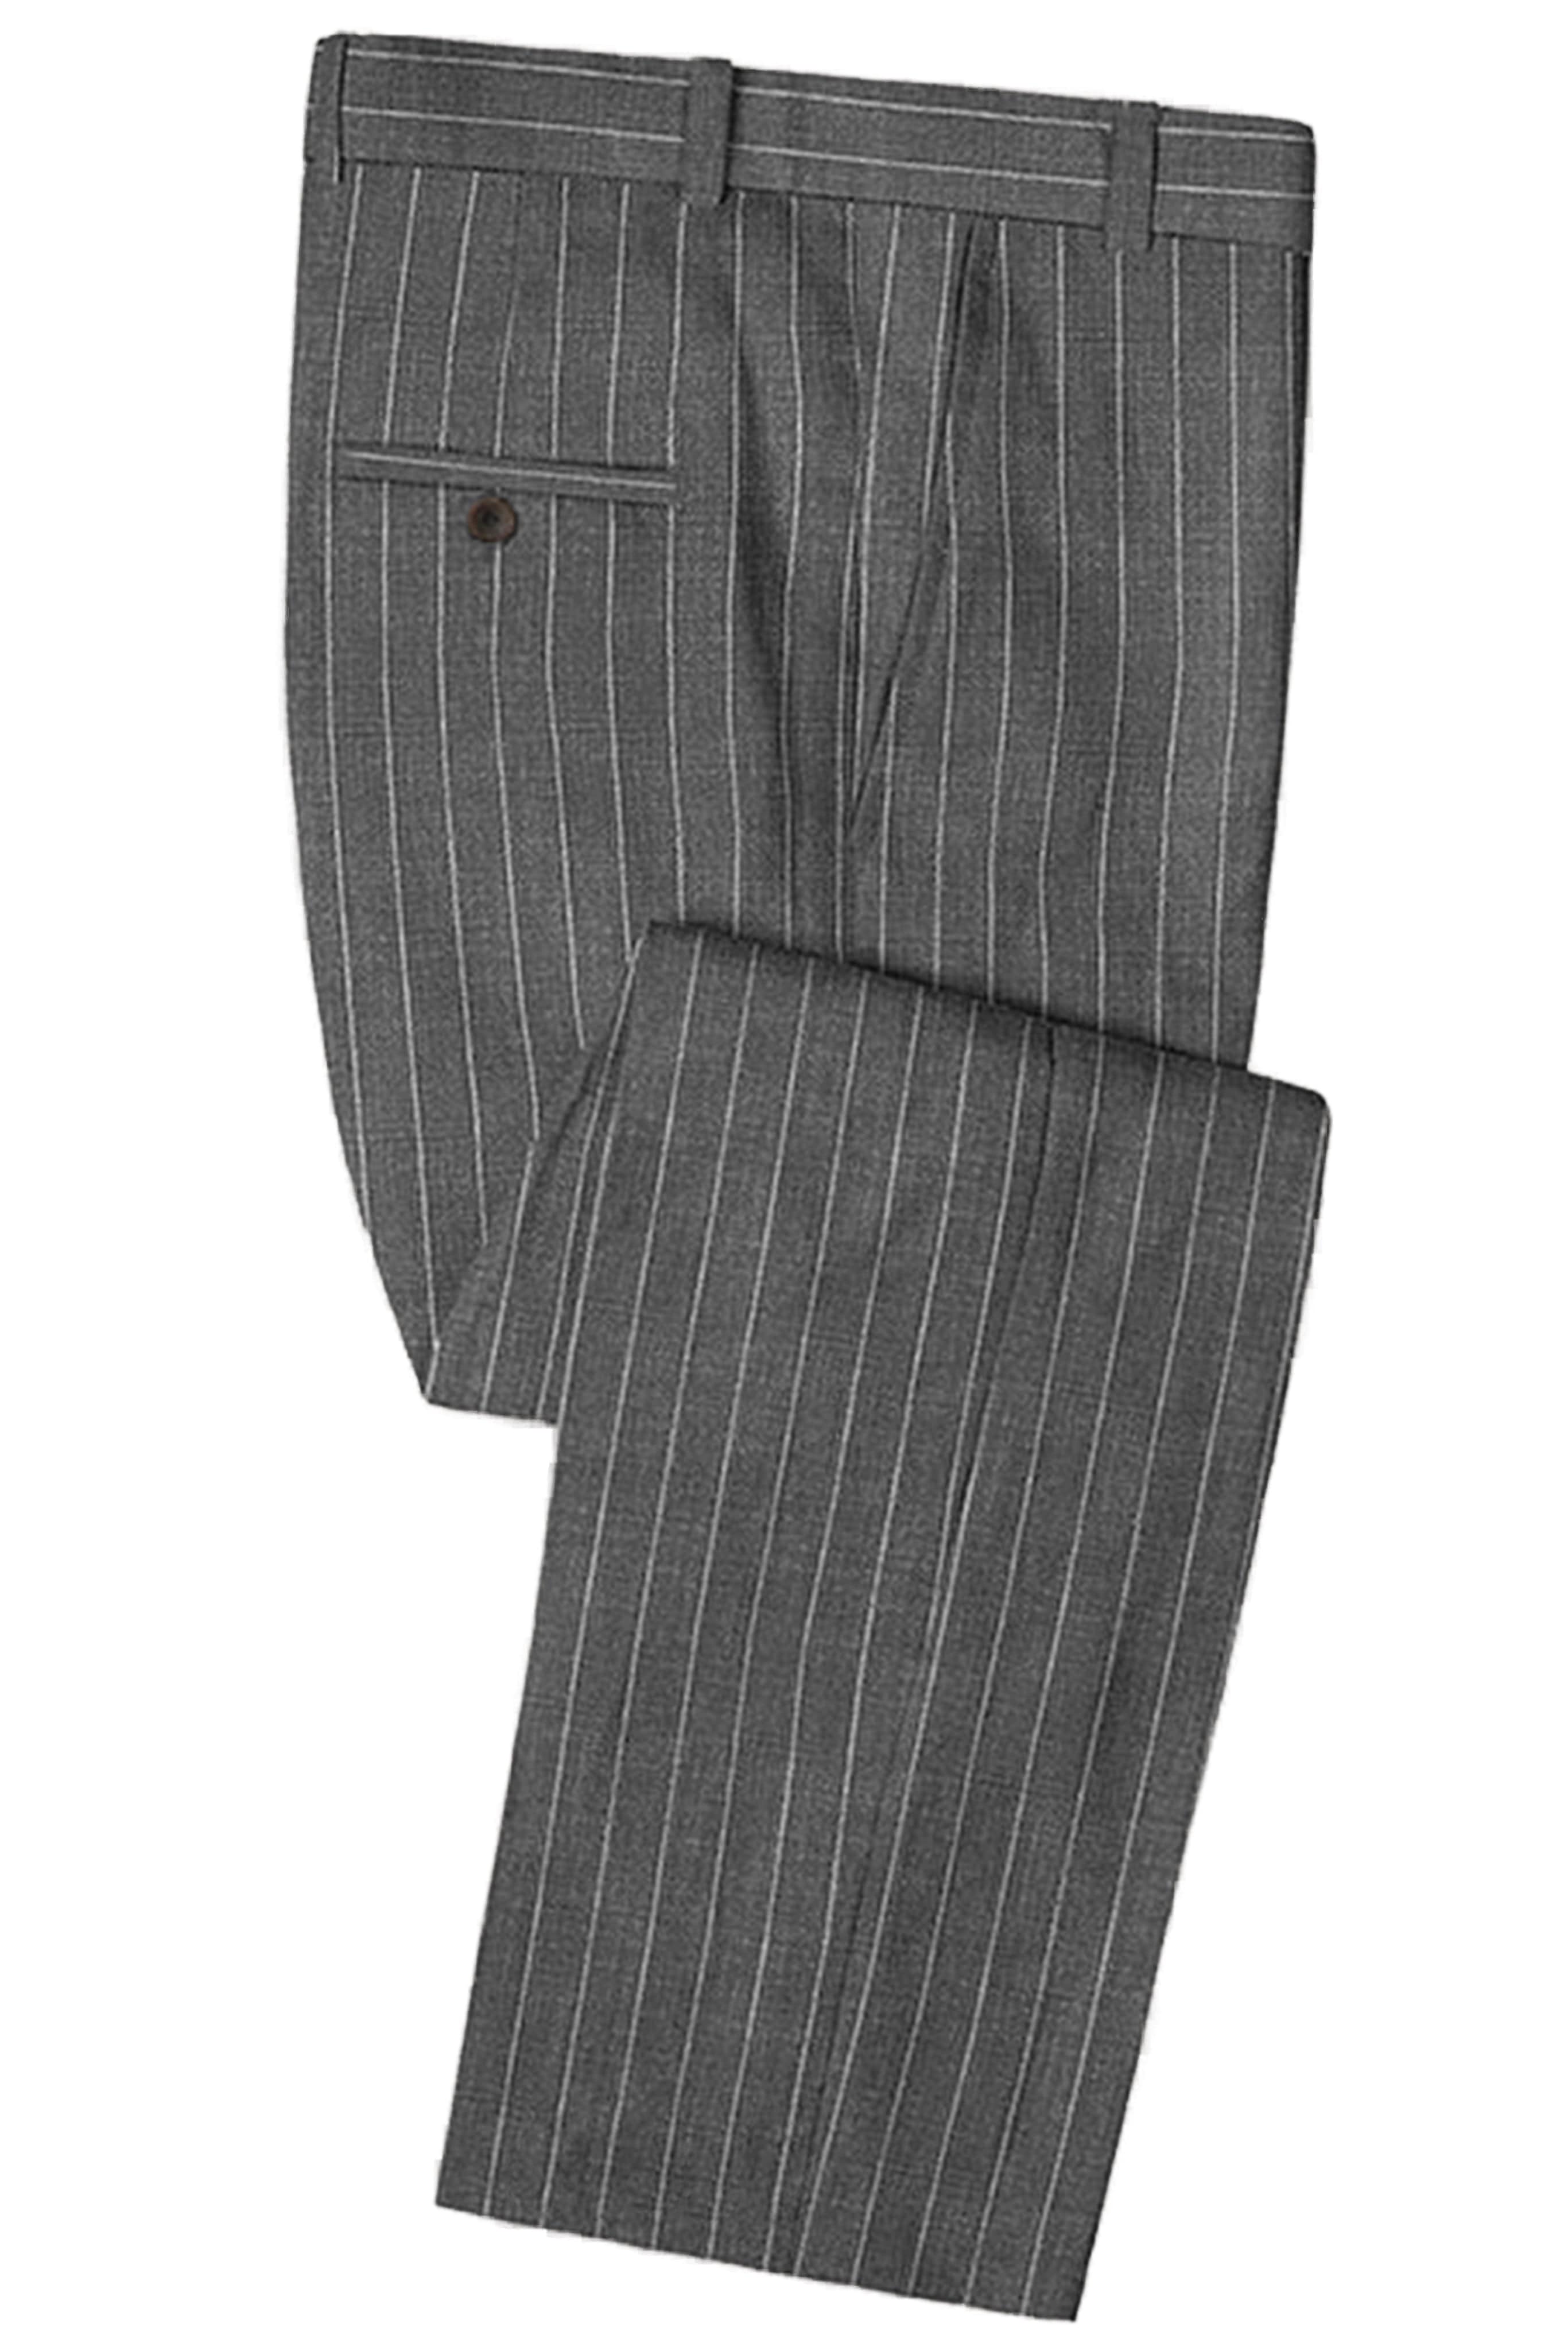 aesido Men's Business Casual Striped Pants